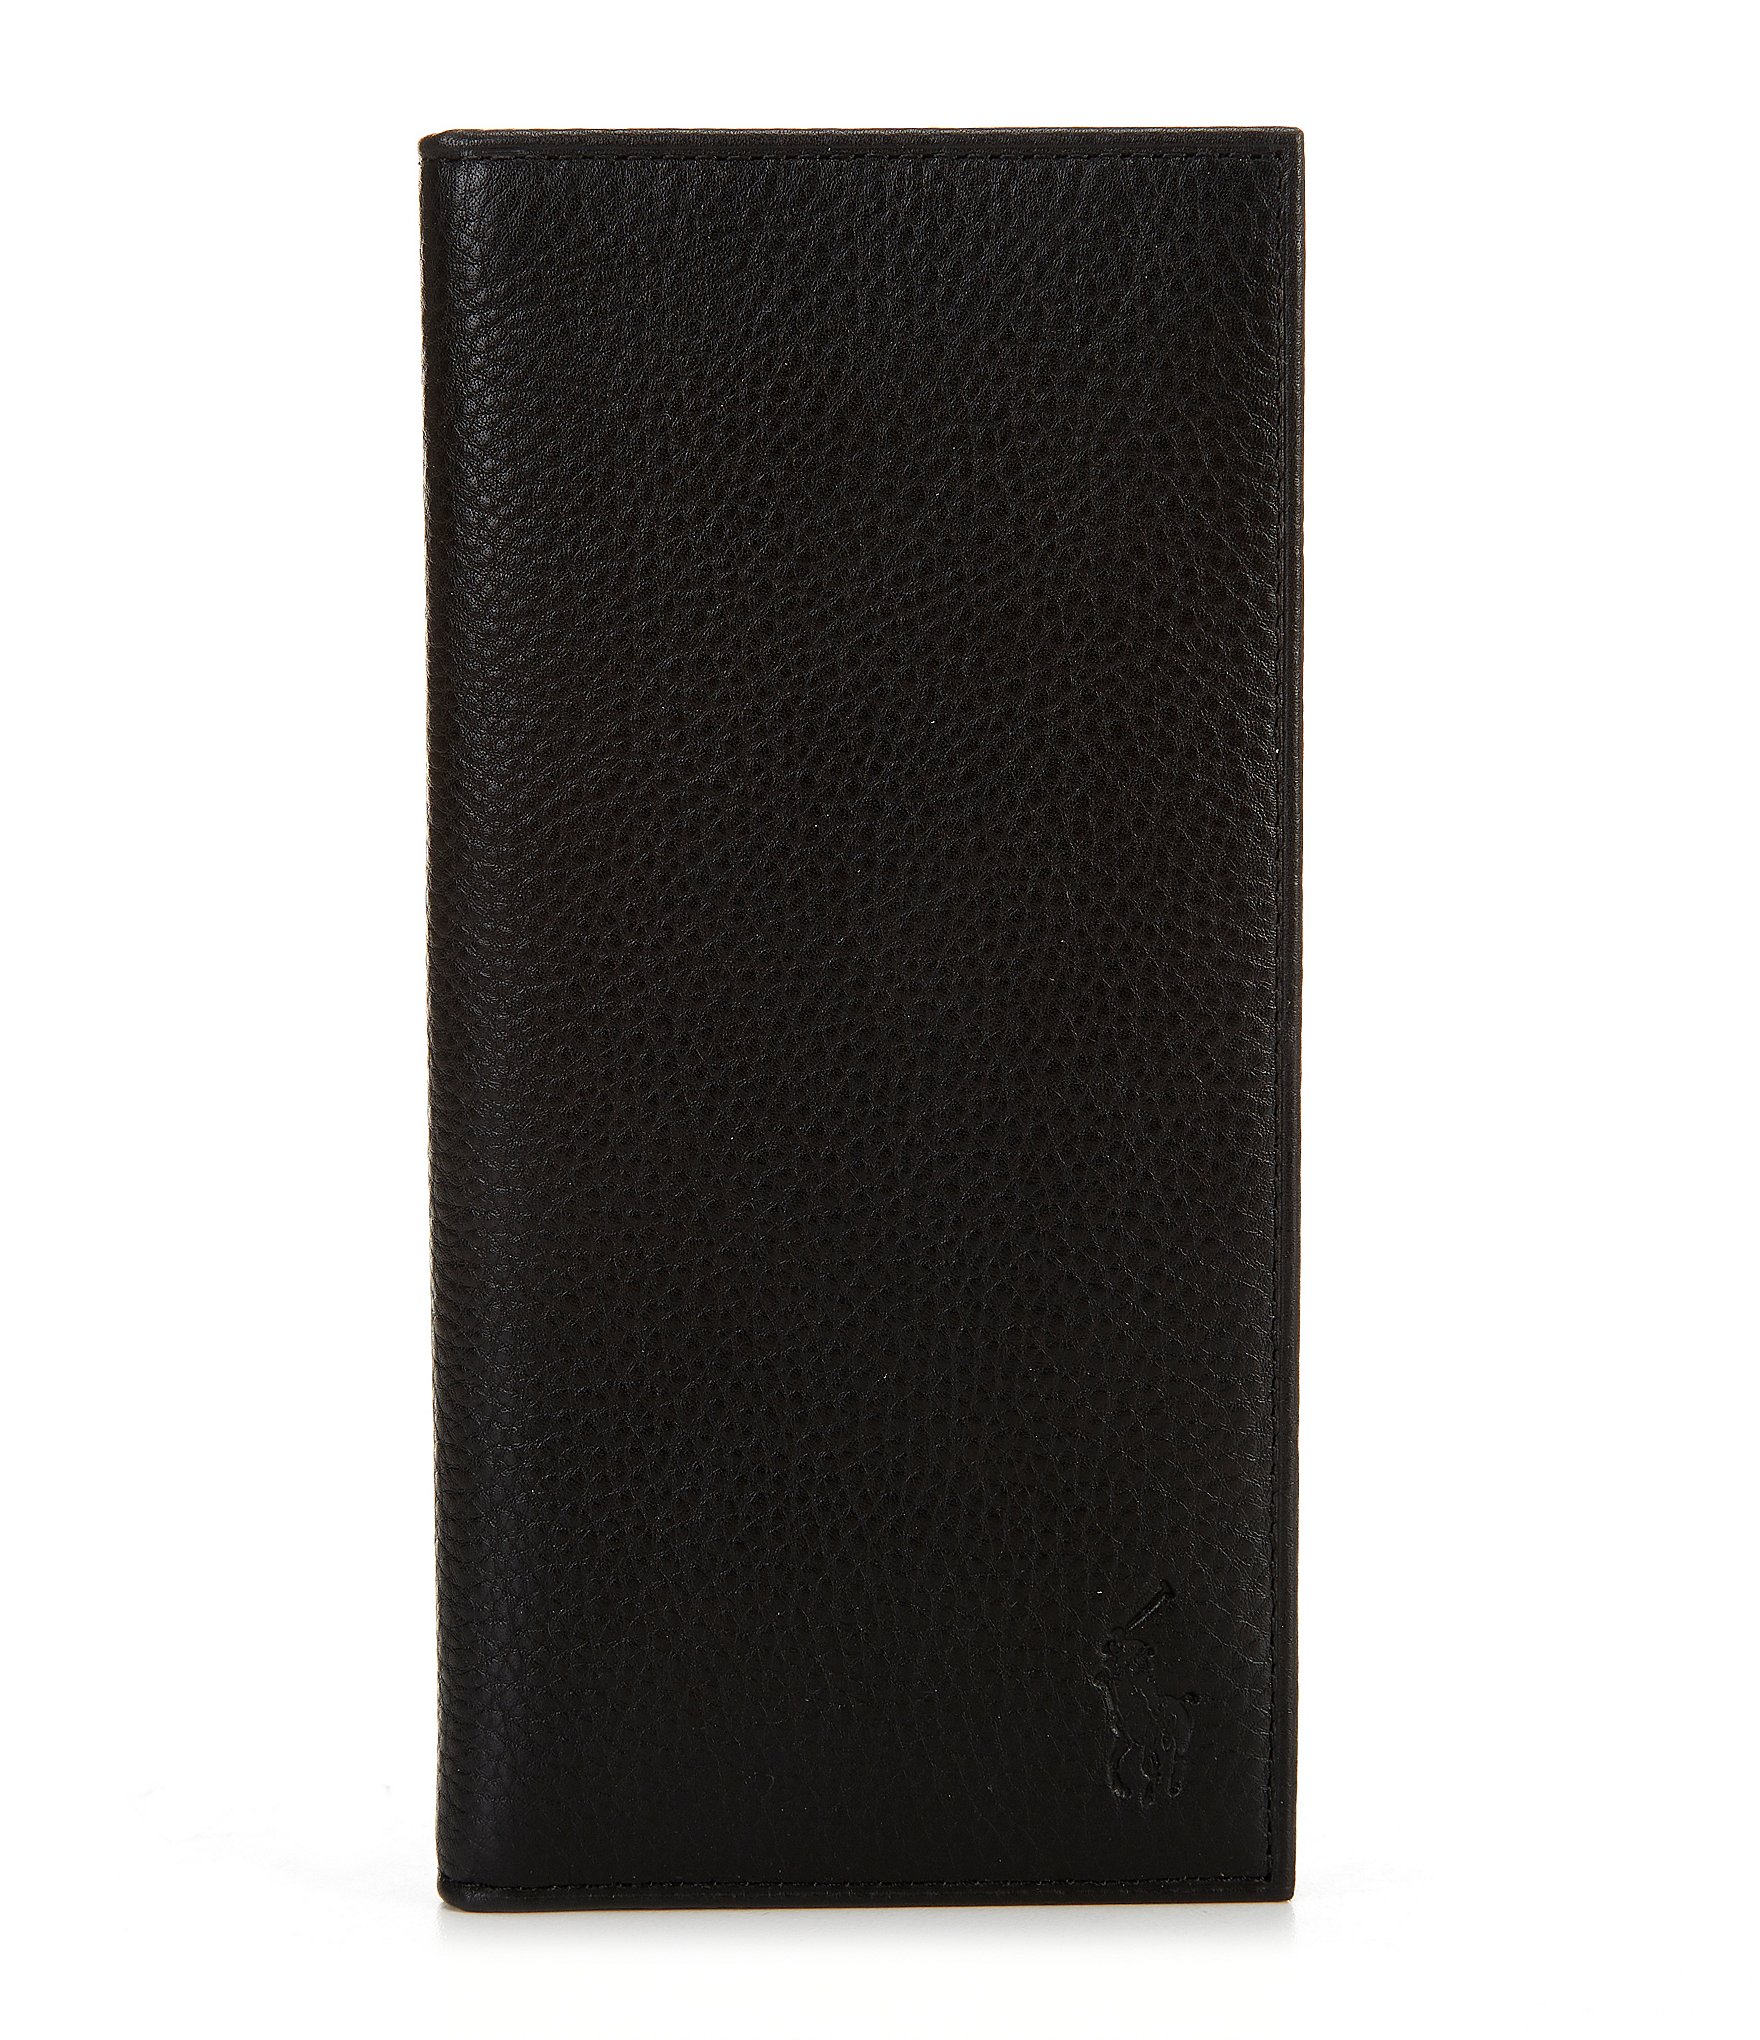 Polo Ralph Lauren “BIG PONY” Magnetic Leather Money Clip W/ Box